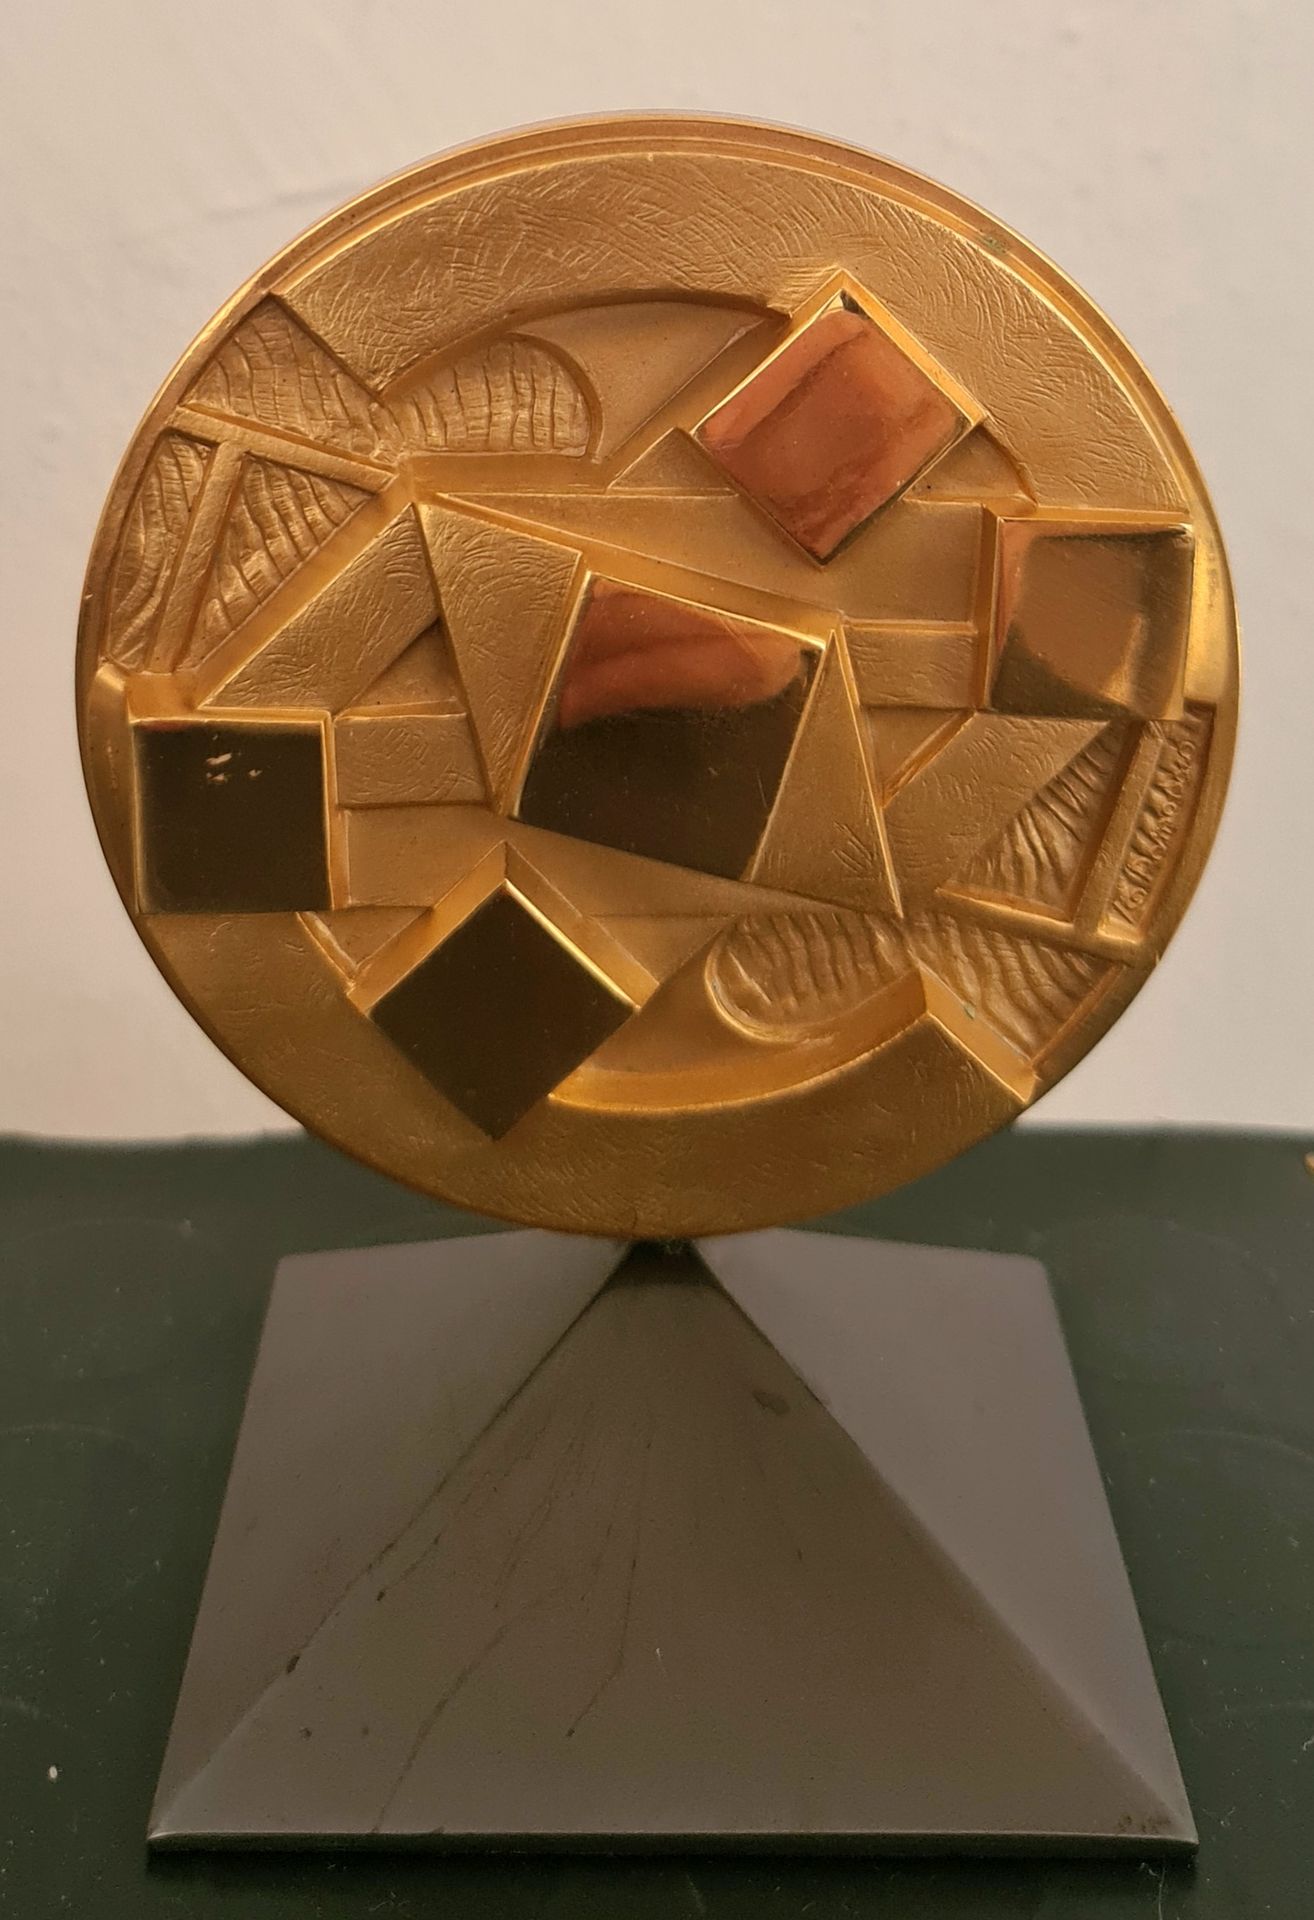 GIO POMODORO 'Sunshine' 1984 Gilt Bronze Medal Size: 11cm x 8cm Certification: E&hellip;